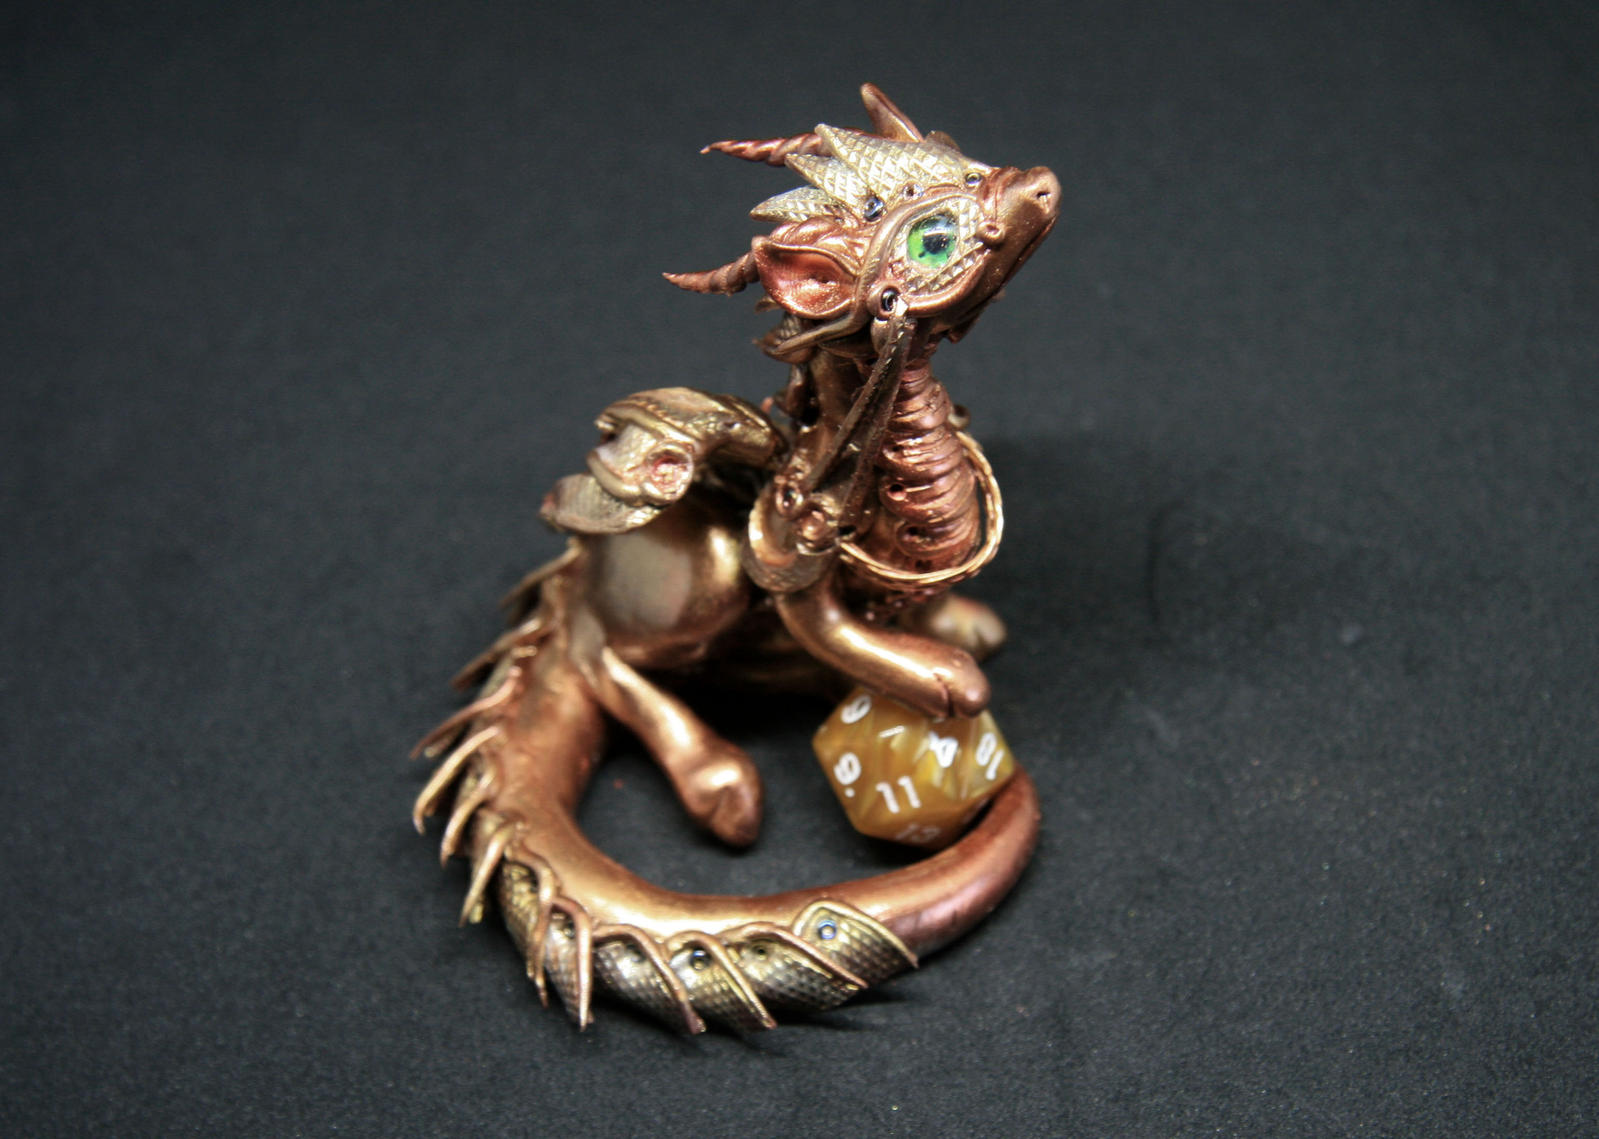 roki___steampunk_gold_and_copper_dragon_figurine_by_akalewia_dazizl1-fullview.jpg